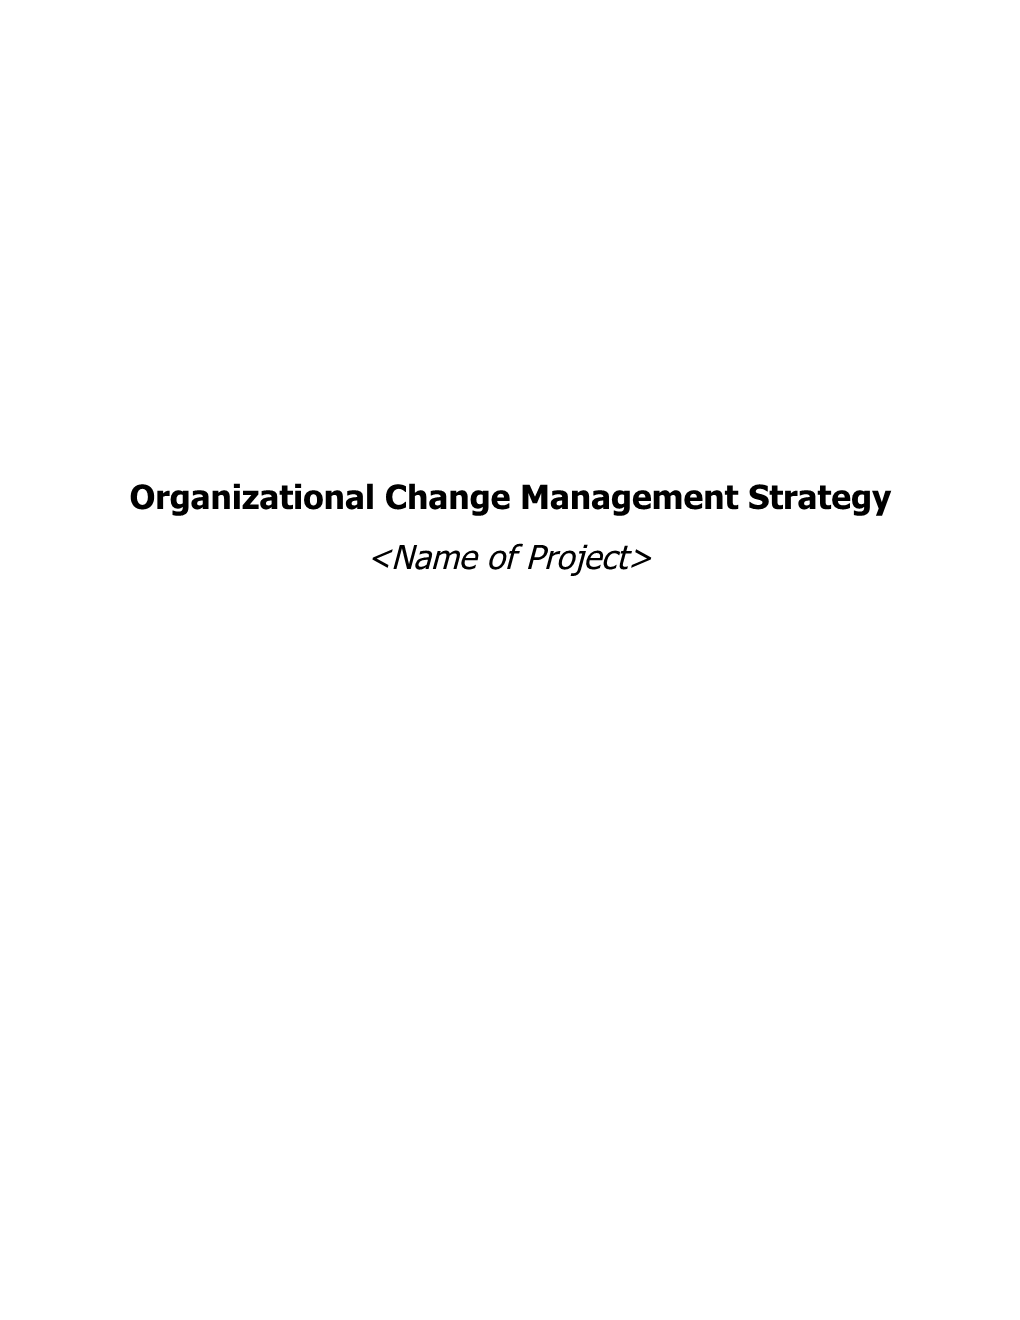 PAQC/Carelink Change Management Plan